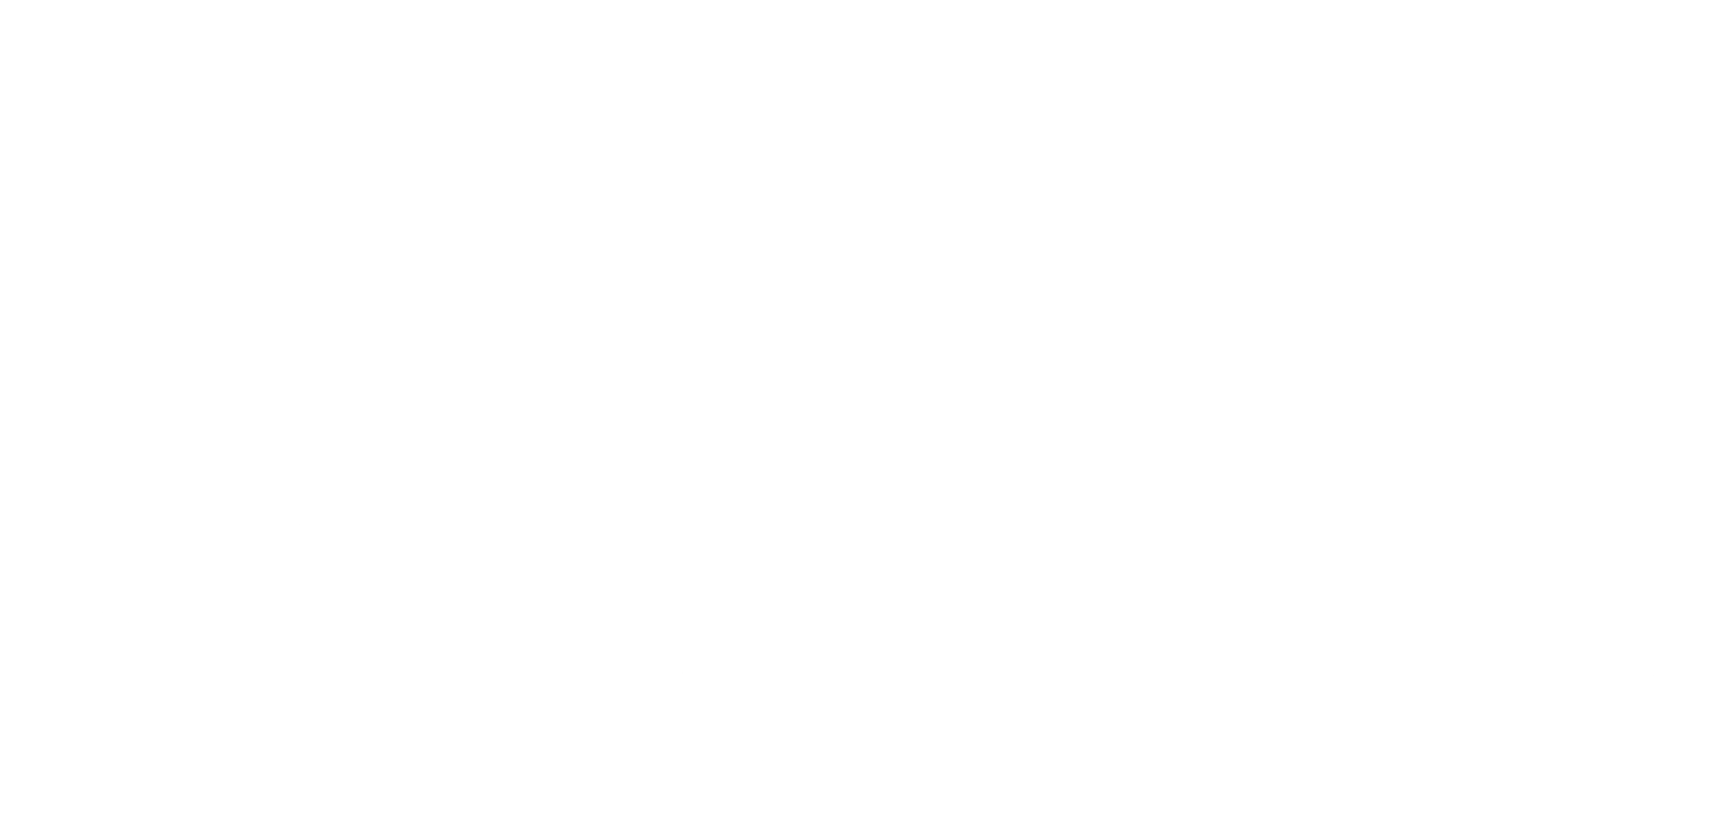 HLM Redovisning AB Logo 1 inverted